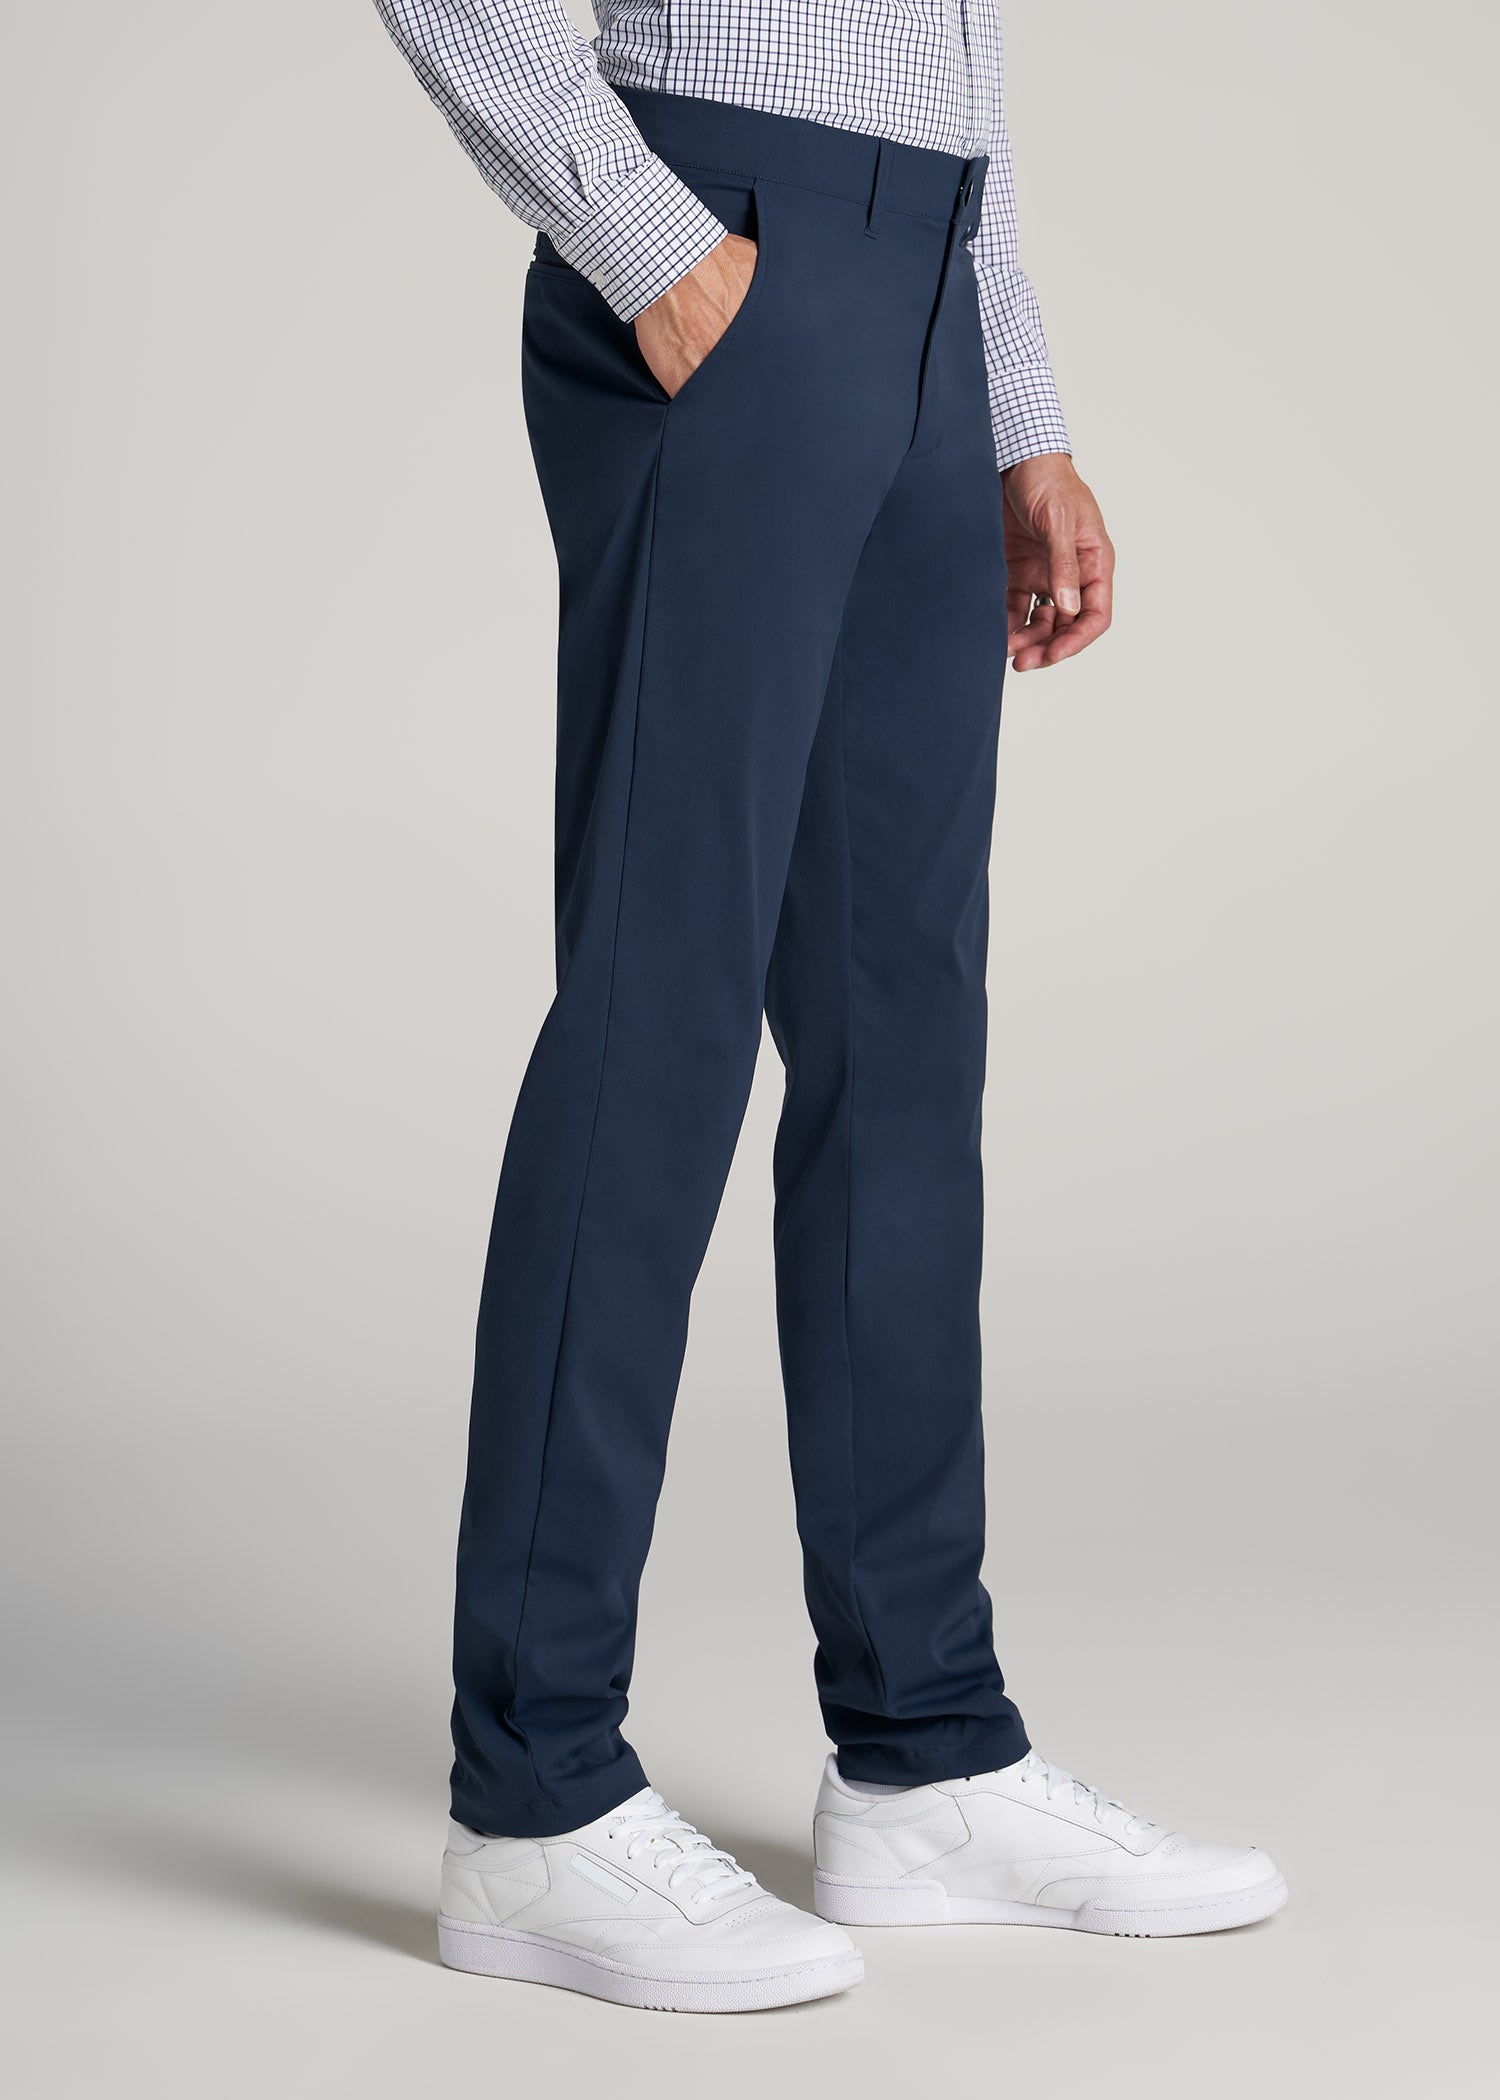 Traveler Chino Pants for Tall Men | American Tall